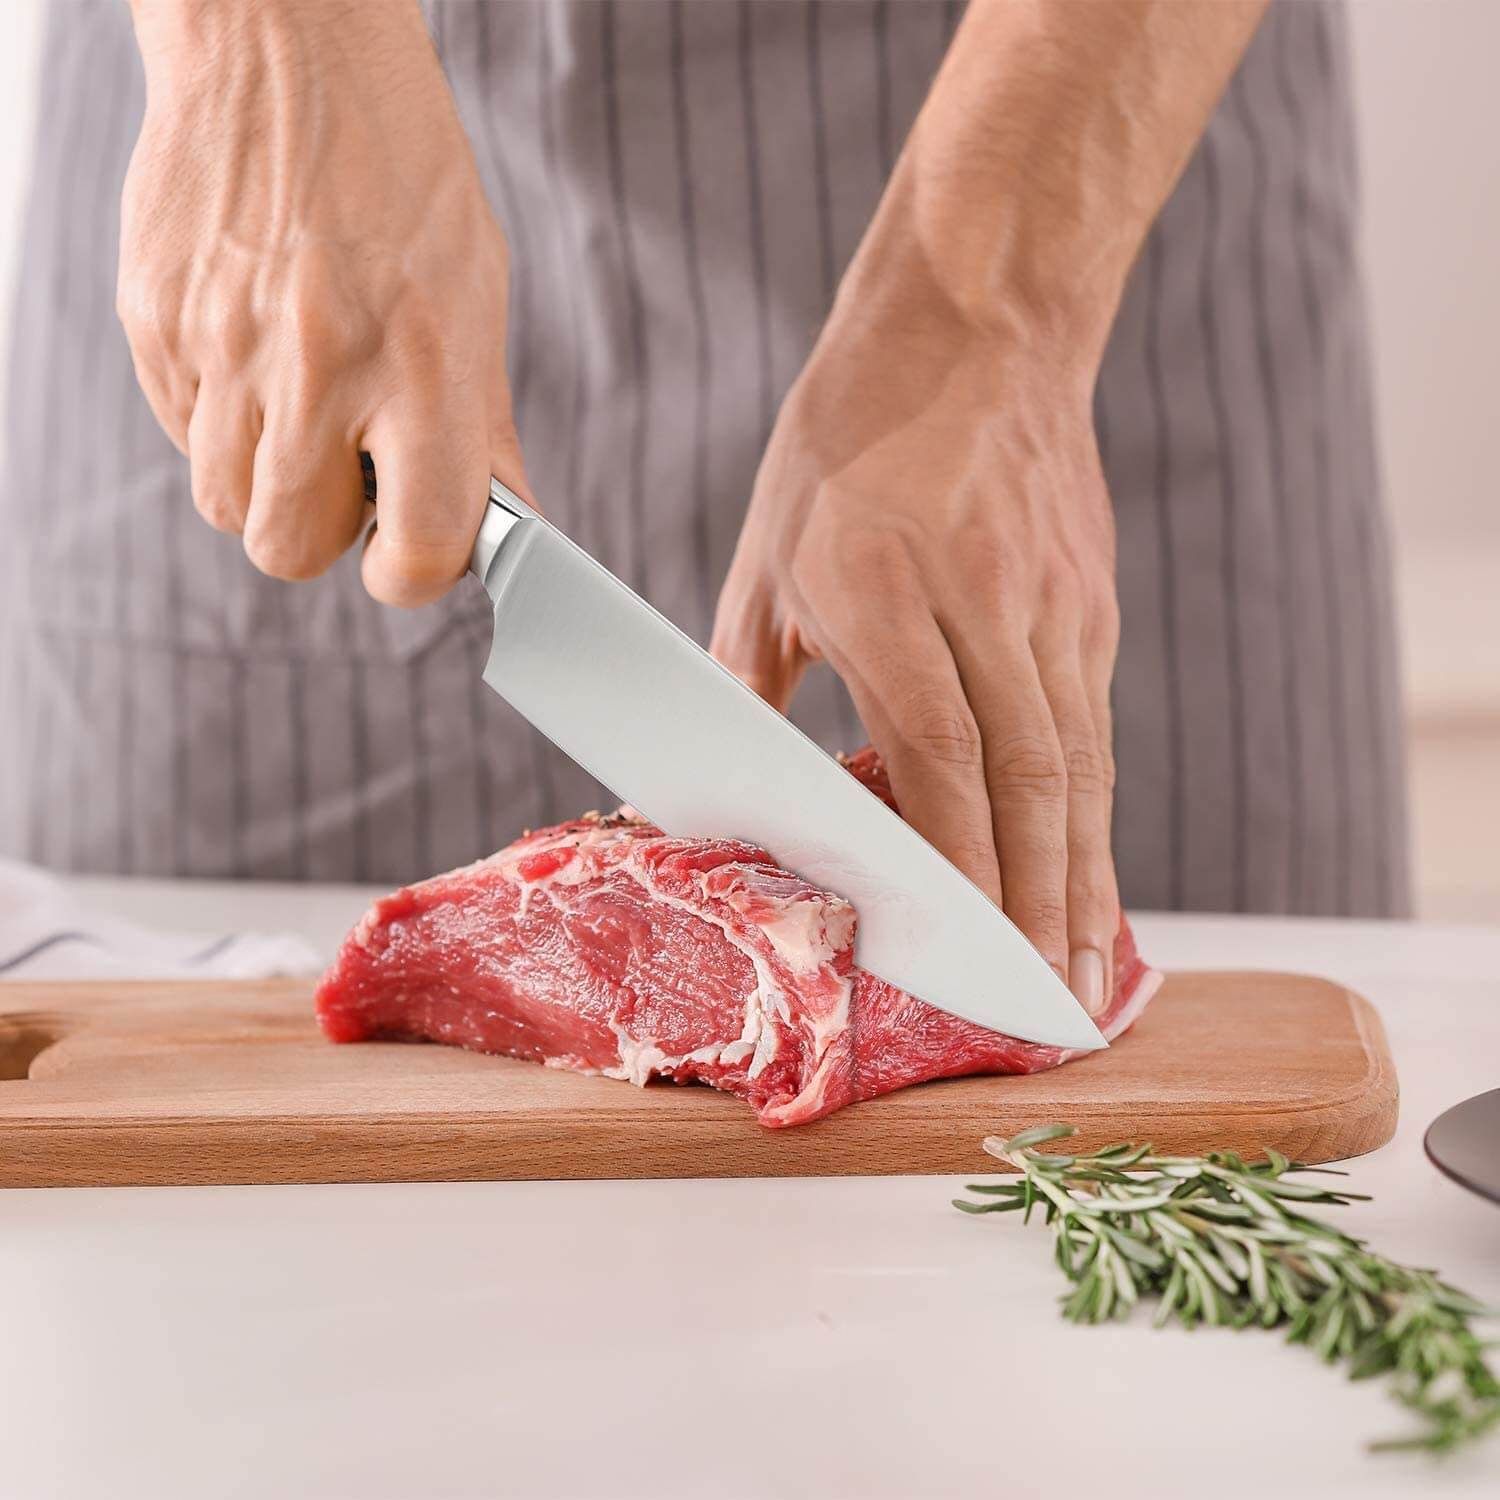 8 inch chef knife cutting steak